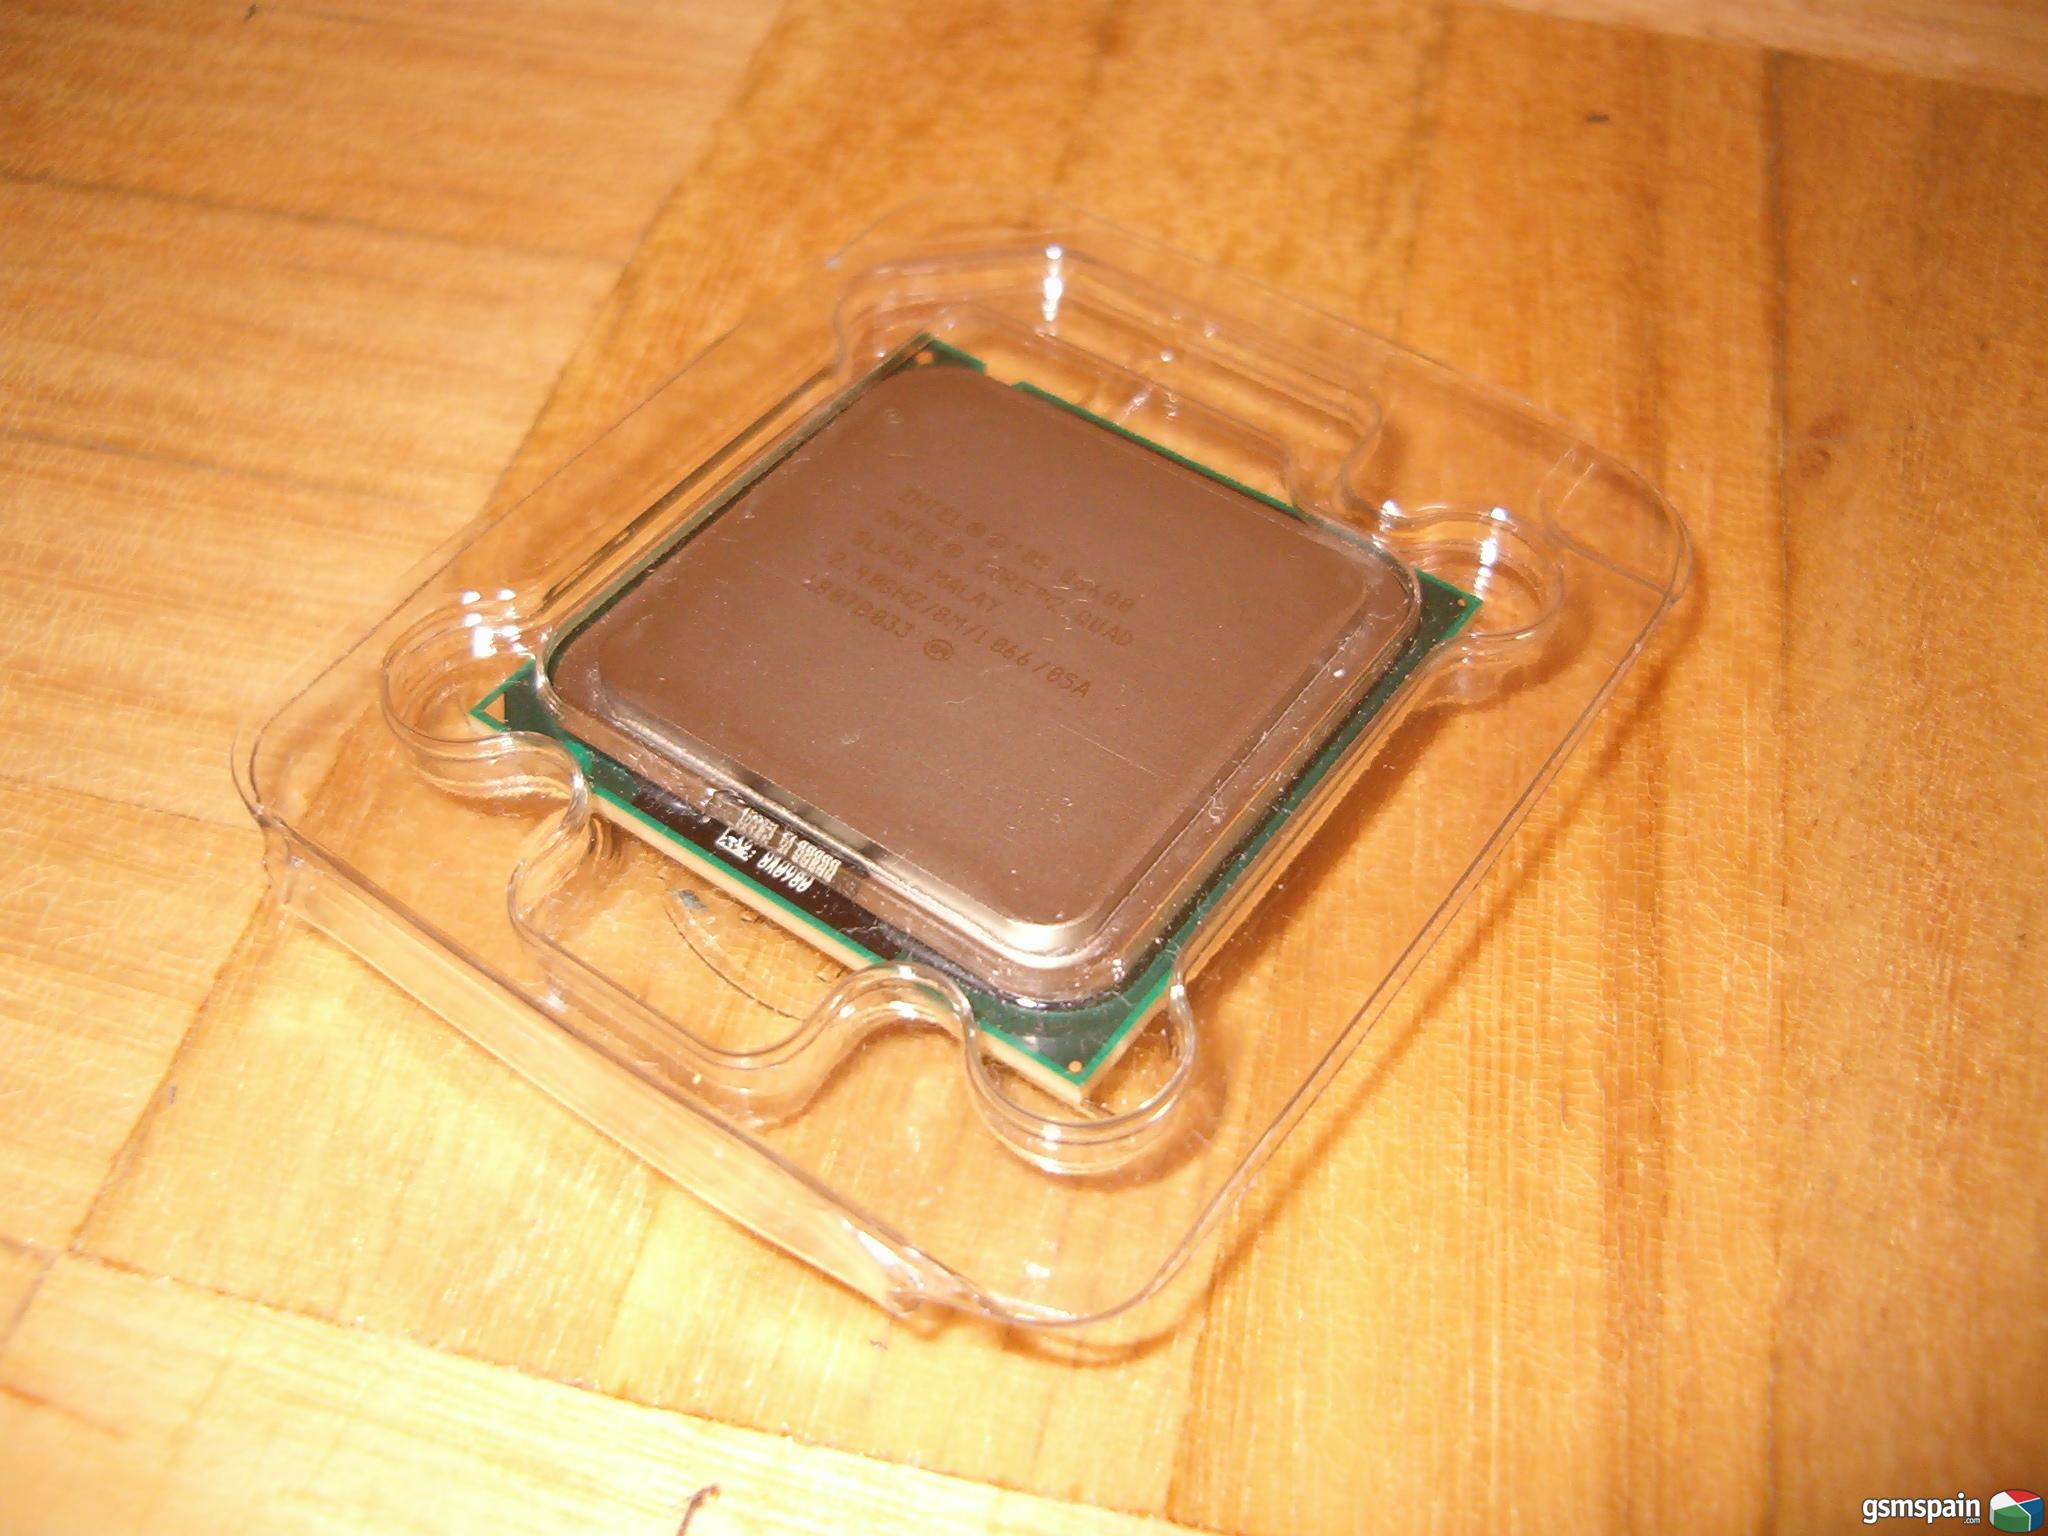 [VENDO] Procesador Intel Core 2 Quad Q6600 (SLACR - G0) de zcalo 775